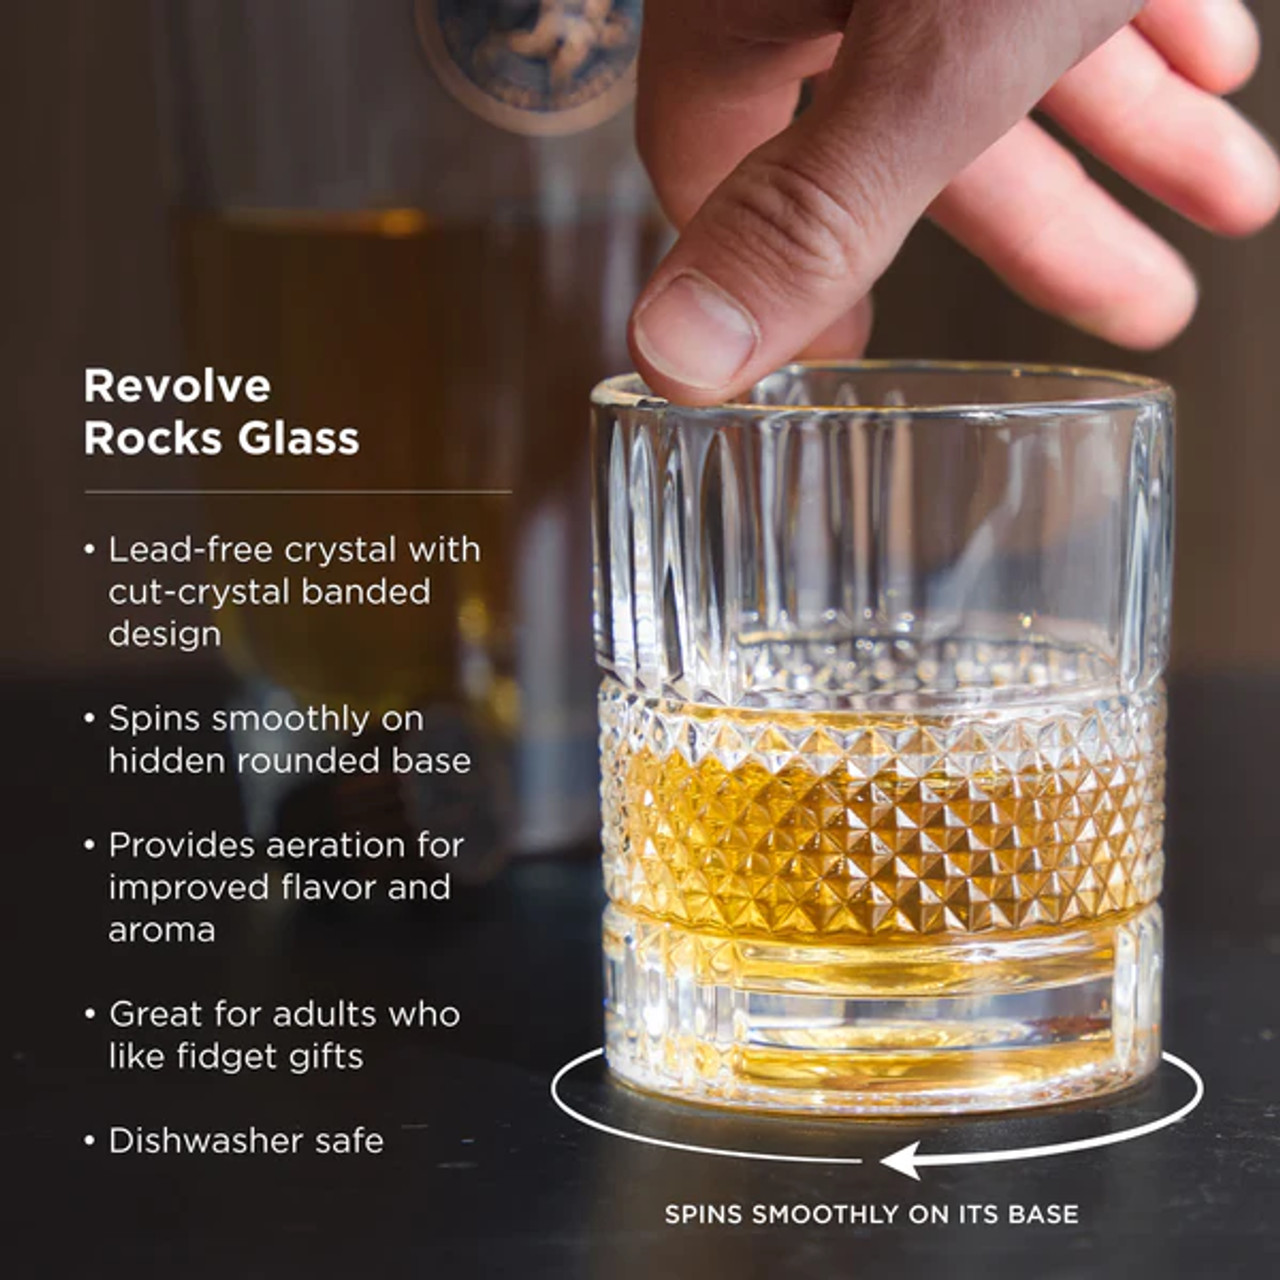 Revolve Rocks Glass by Viski